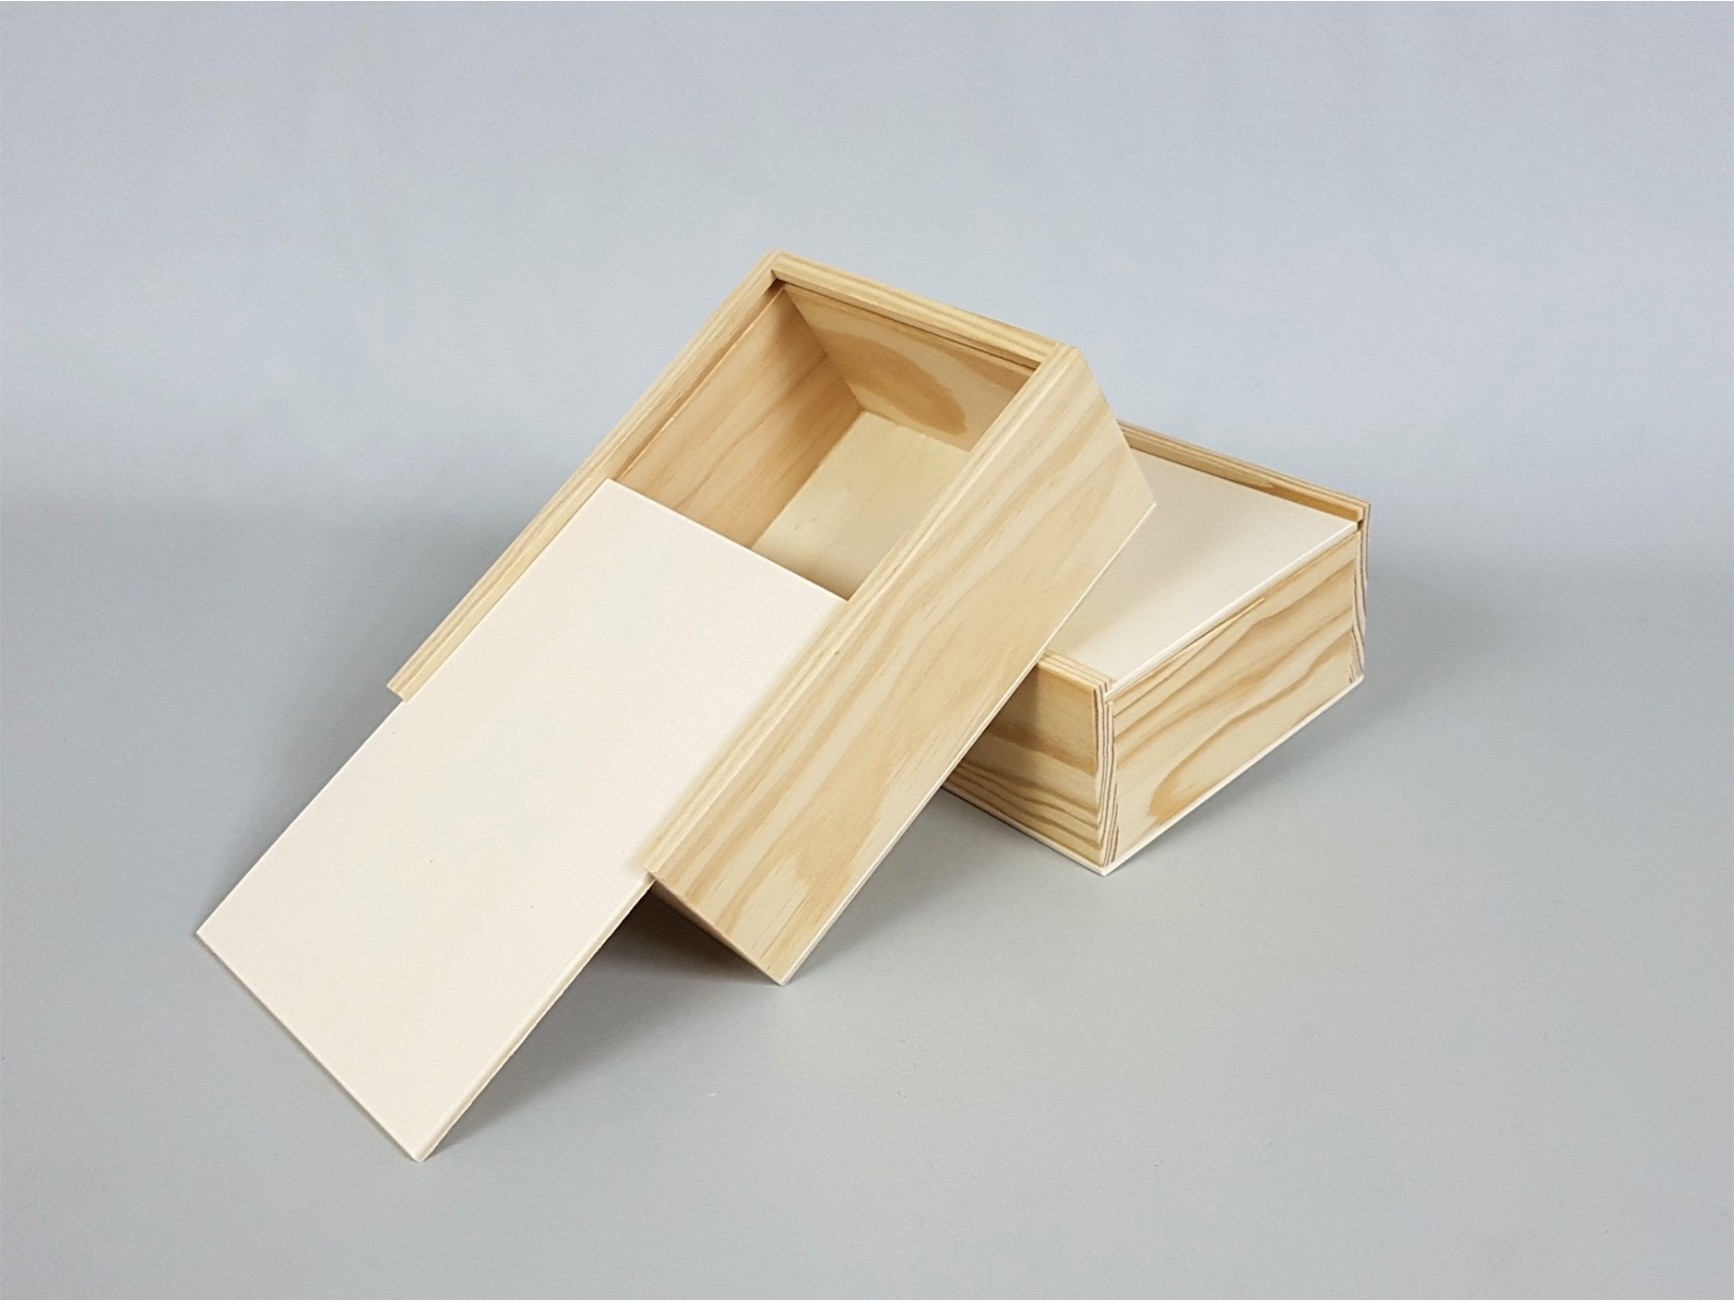  Natural Light Pine Wooden Box (6-Pack) - 7.87x3.94x3.15  Storage Box with Sliding Lid - Small Decorative Storage Boxes - Slide-Top  Box - Mini Gift Jewelry Box - Wooden Photo Storage Box 